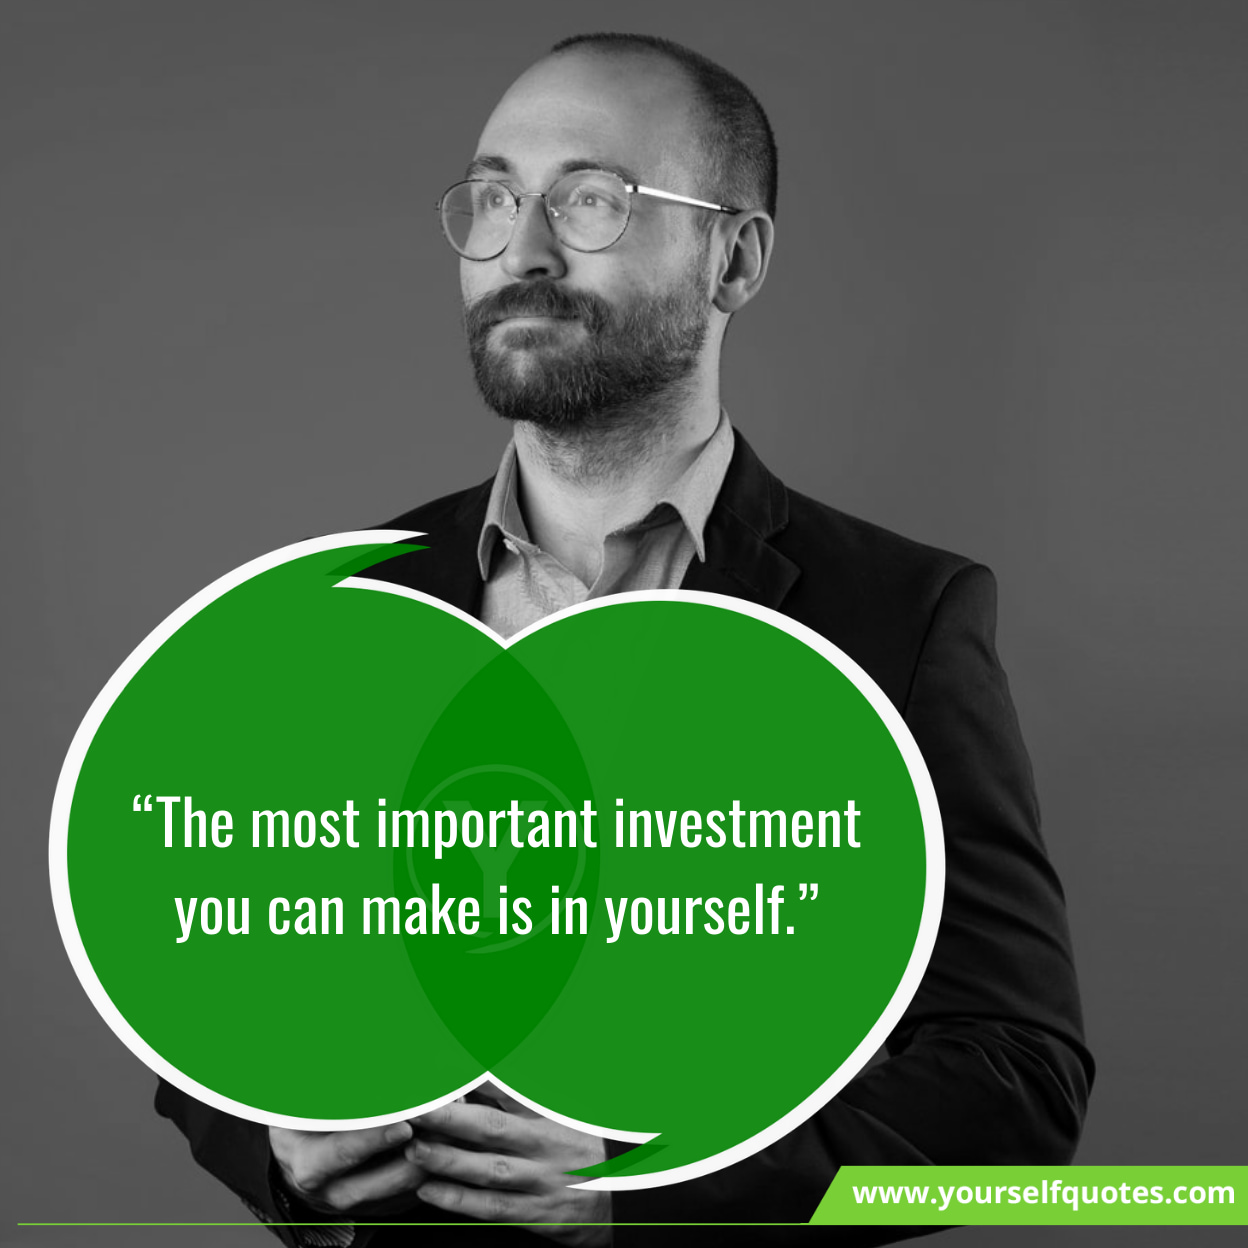 Best Investment Quotes